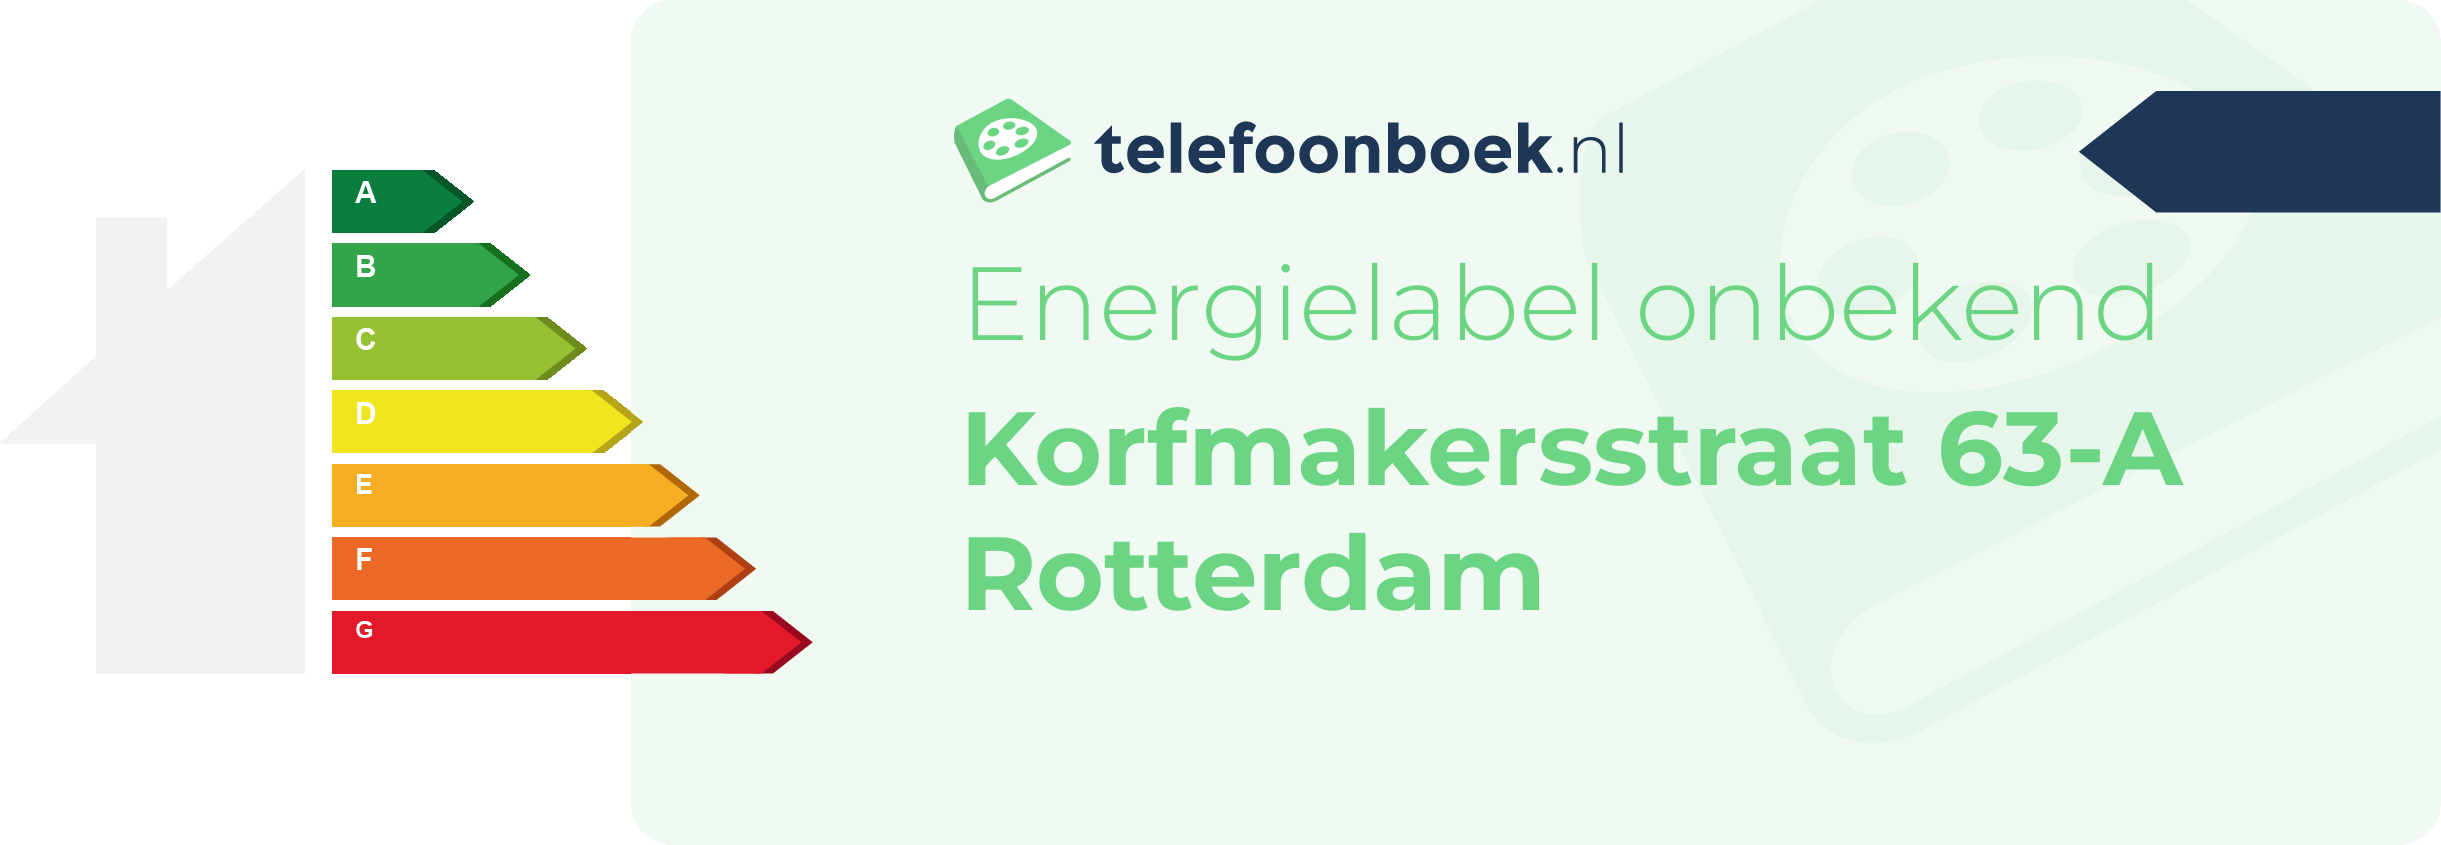 Energielabel Korfmakersstraat 63-A Rotterdam